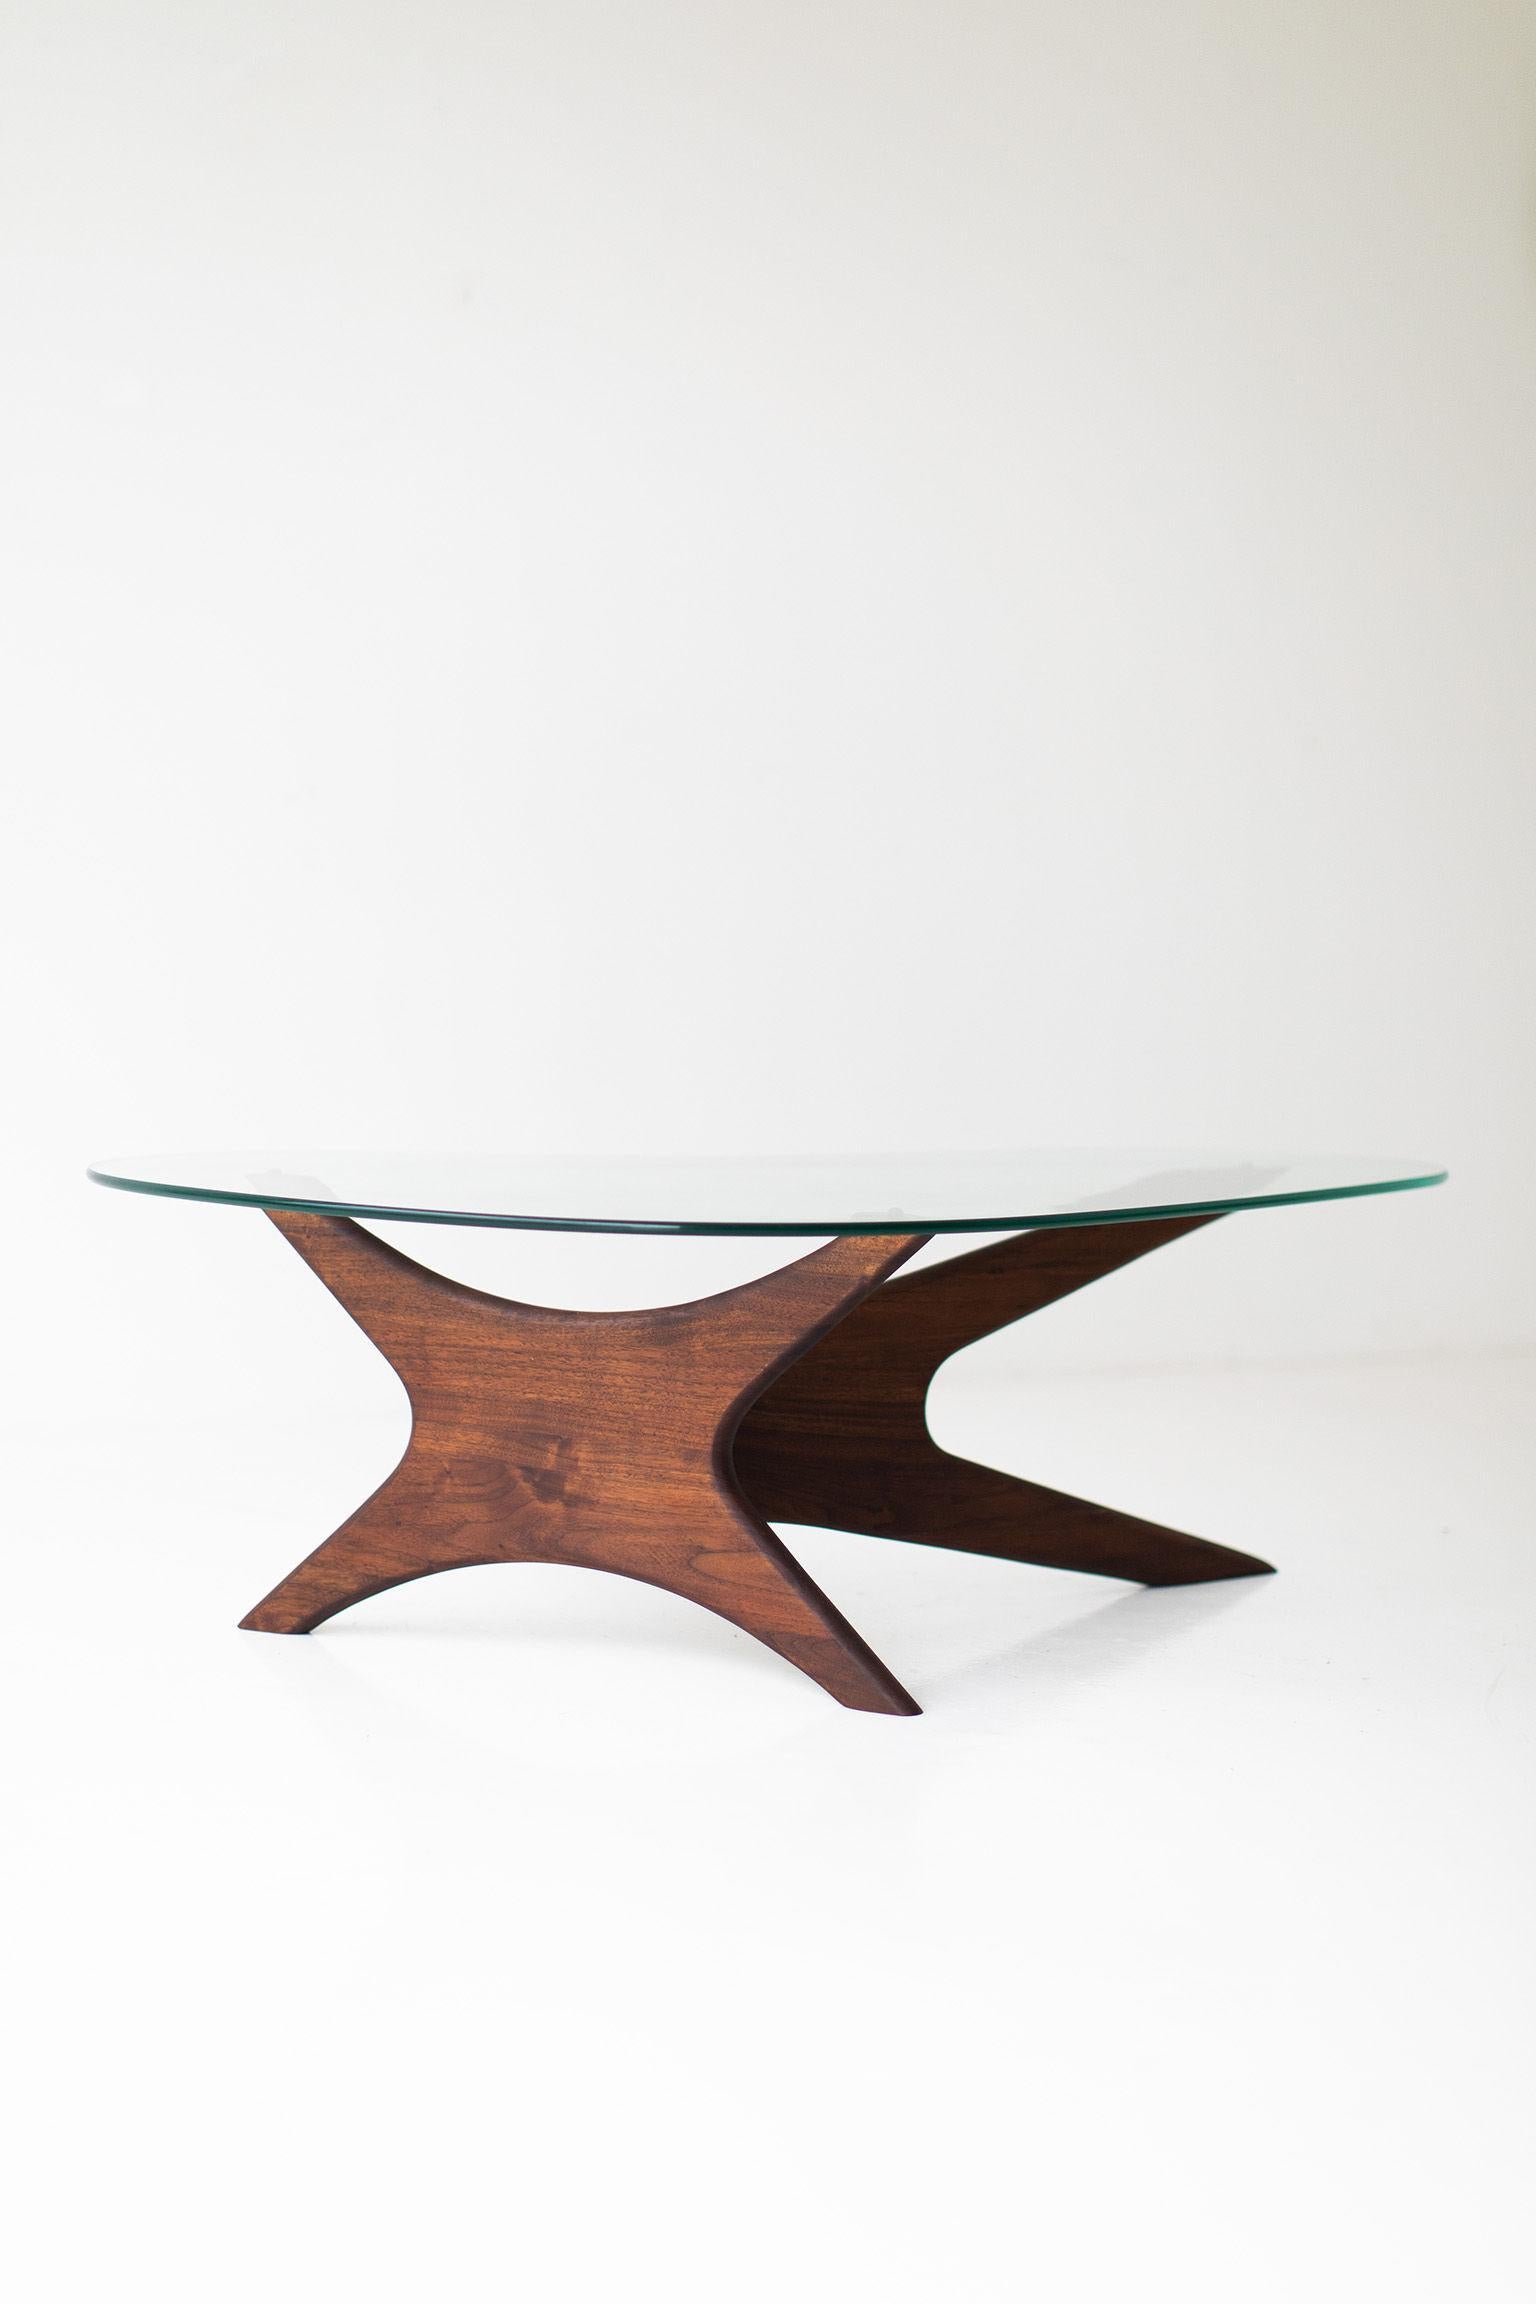 Walnut Adrian Pearsall Coffee Table for Craft Associates Inc.